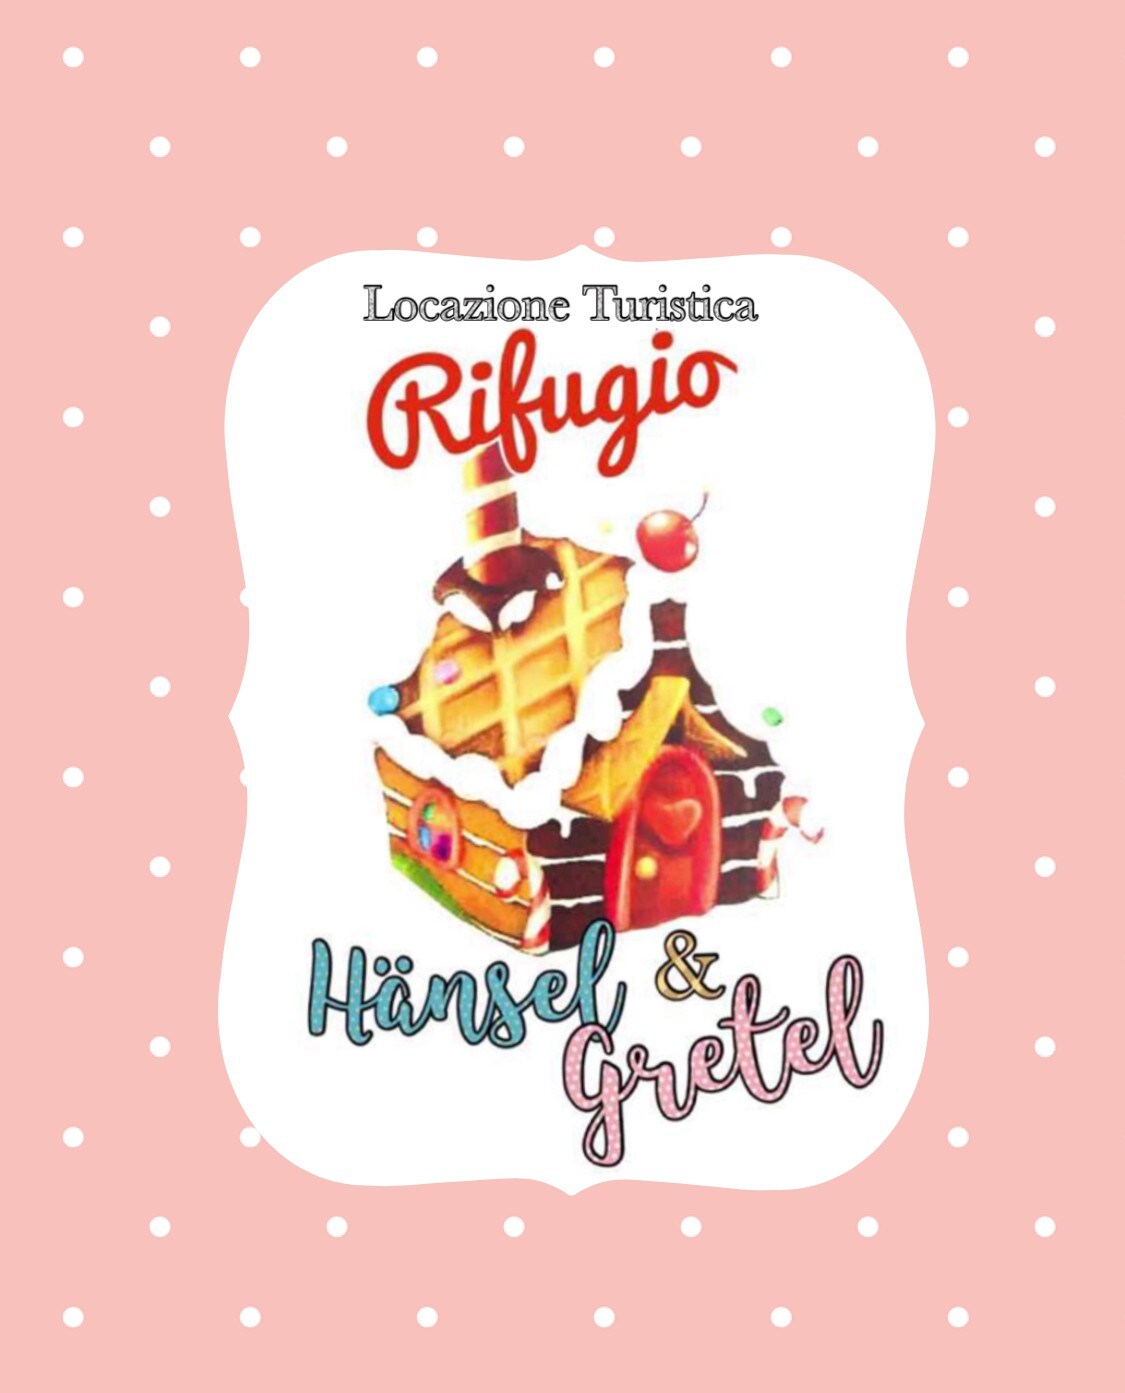 Gretel Rifugio Hänsel & Gretel出租
之旅